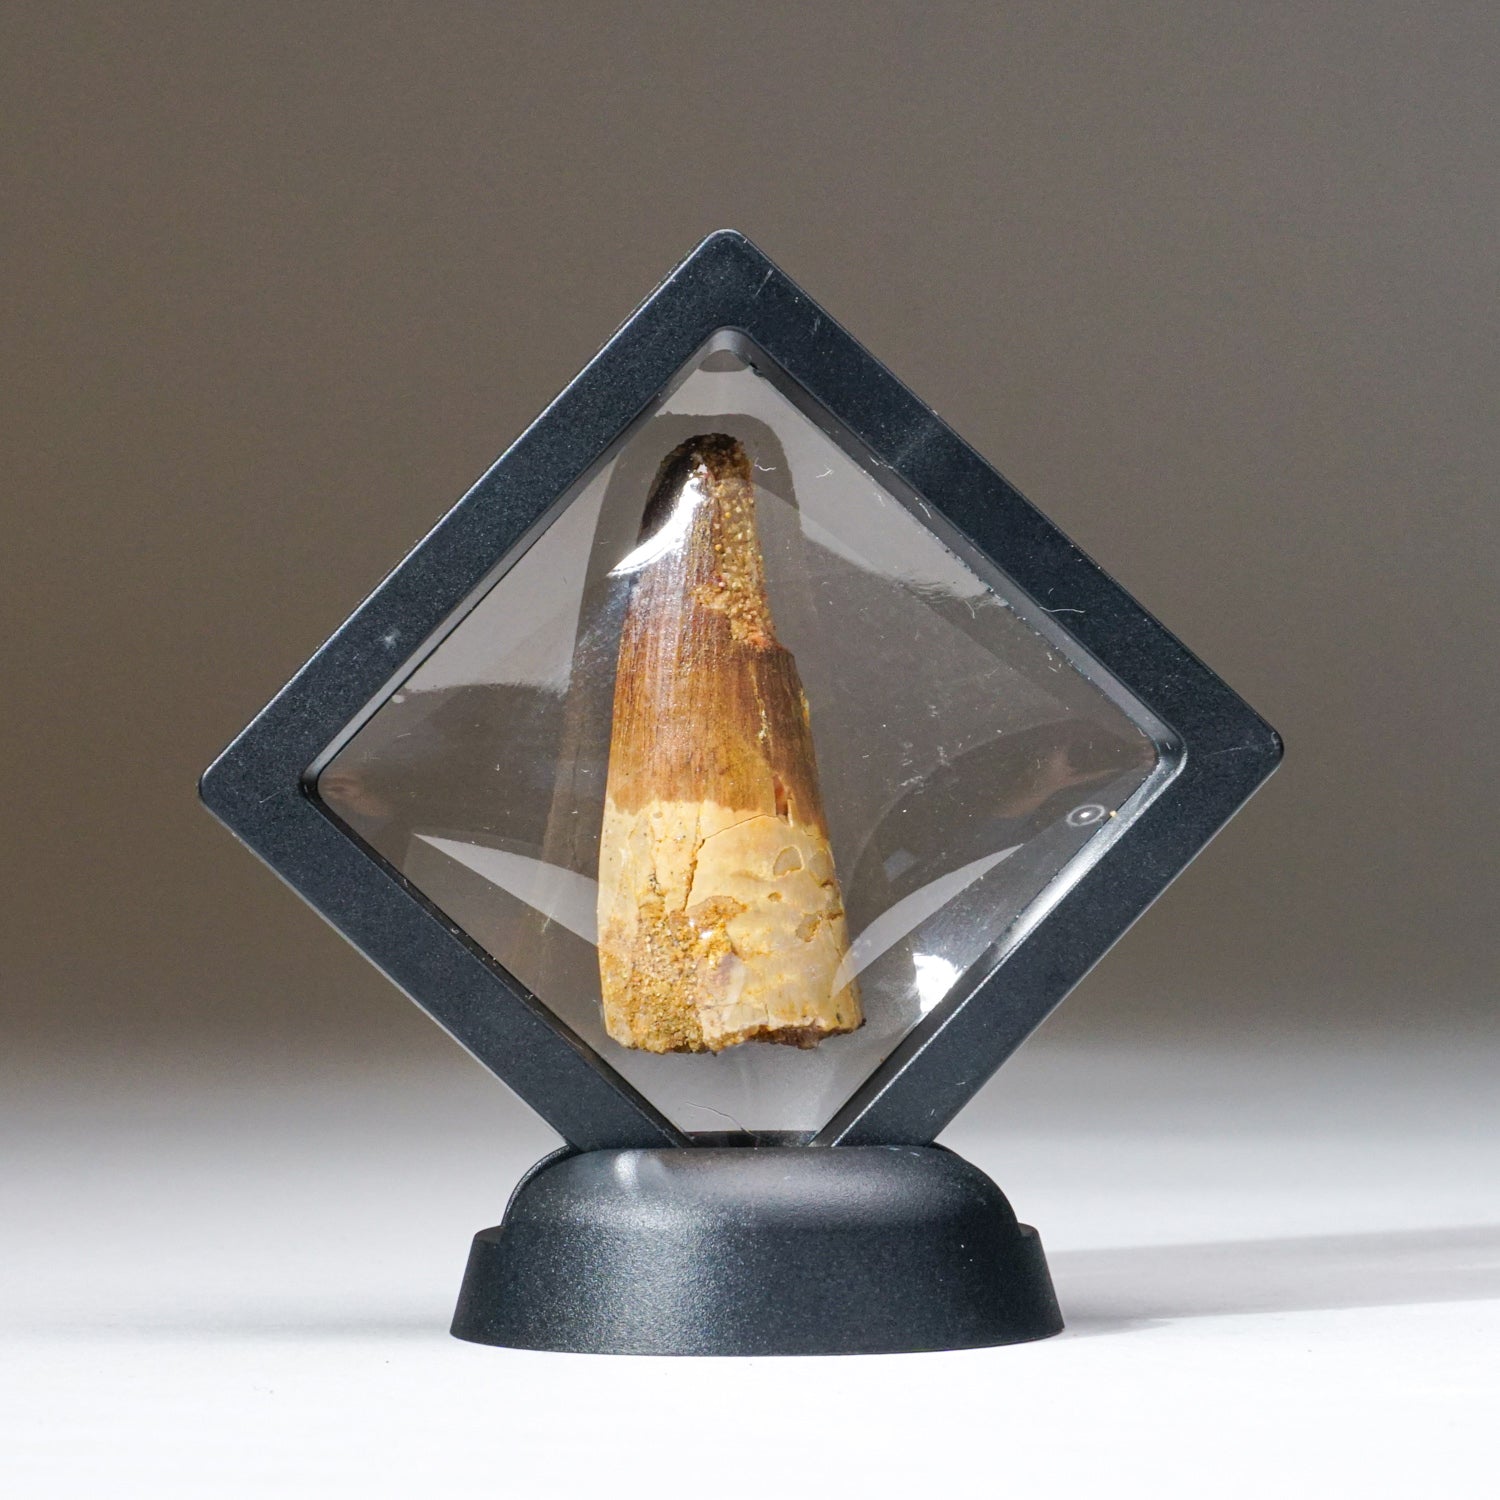 Genuine Carcharodontosaurus Tooth in Display Box (26.8 grams)